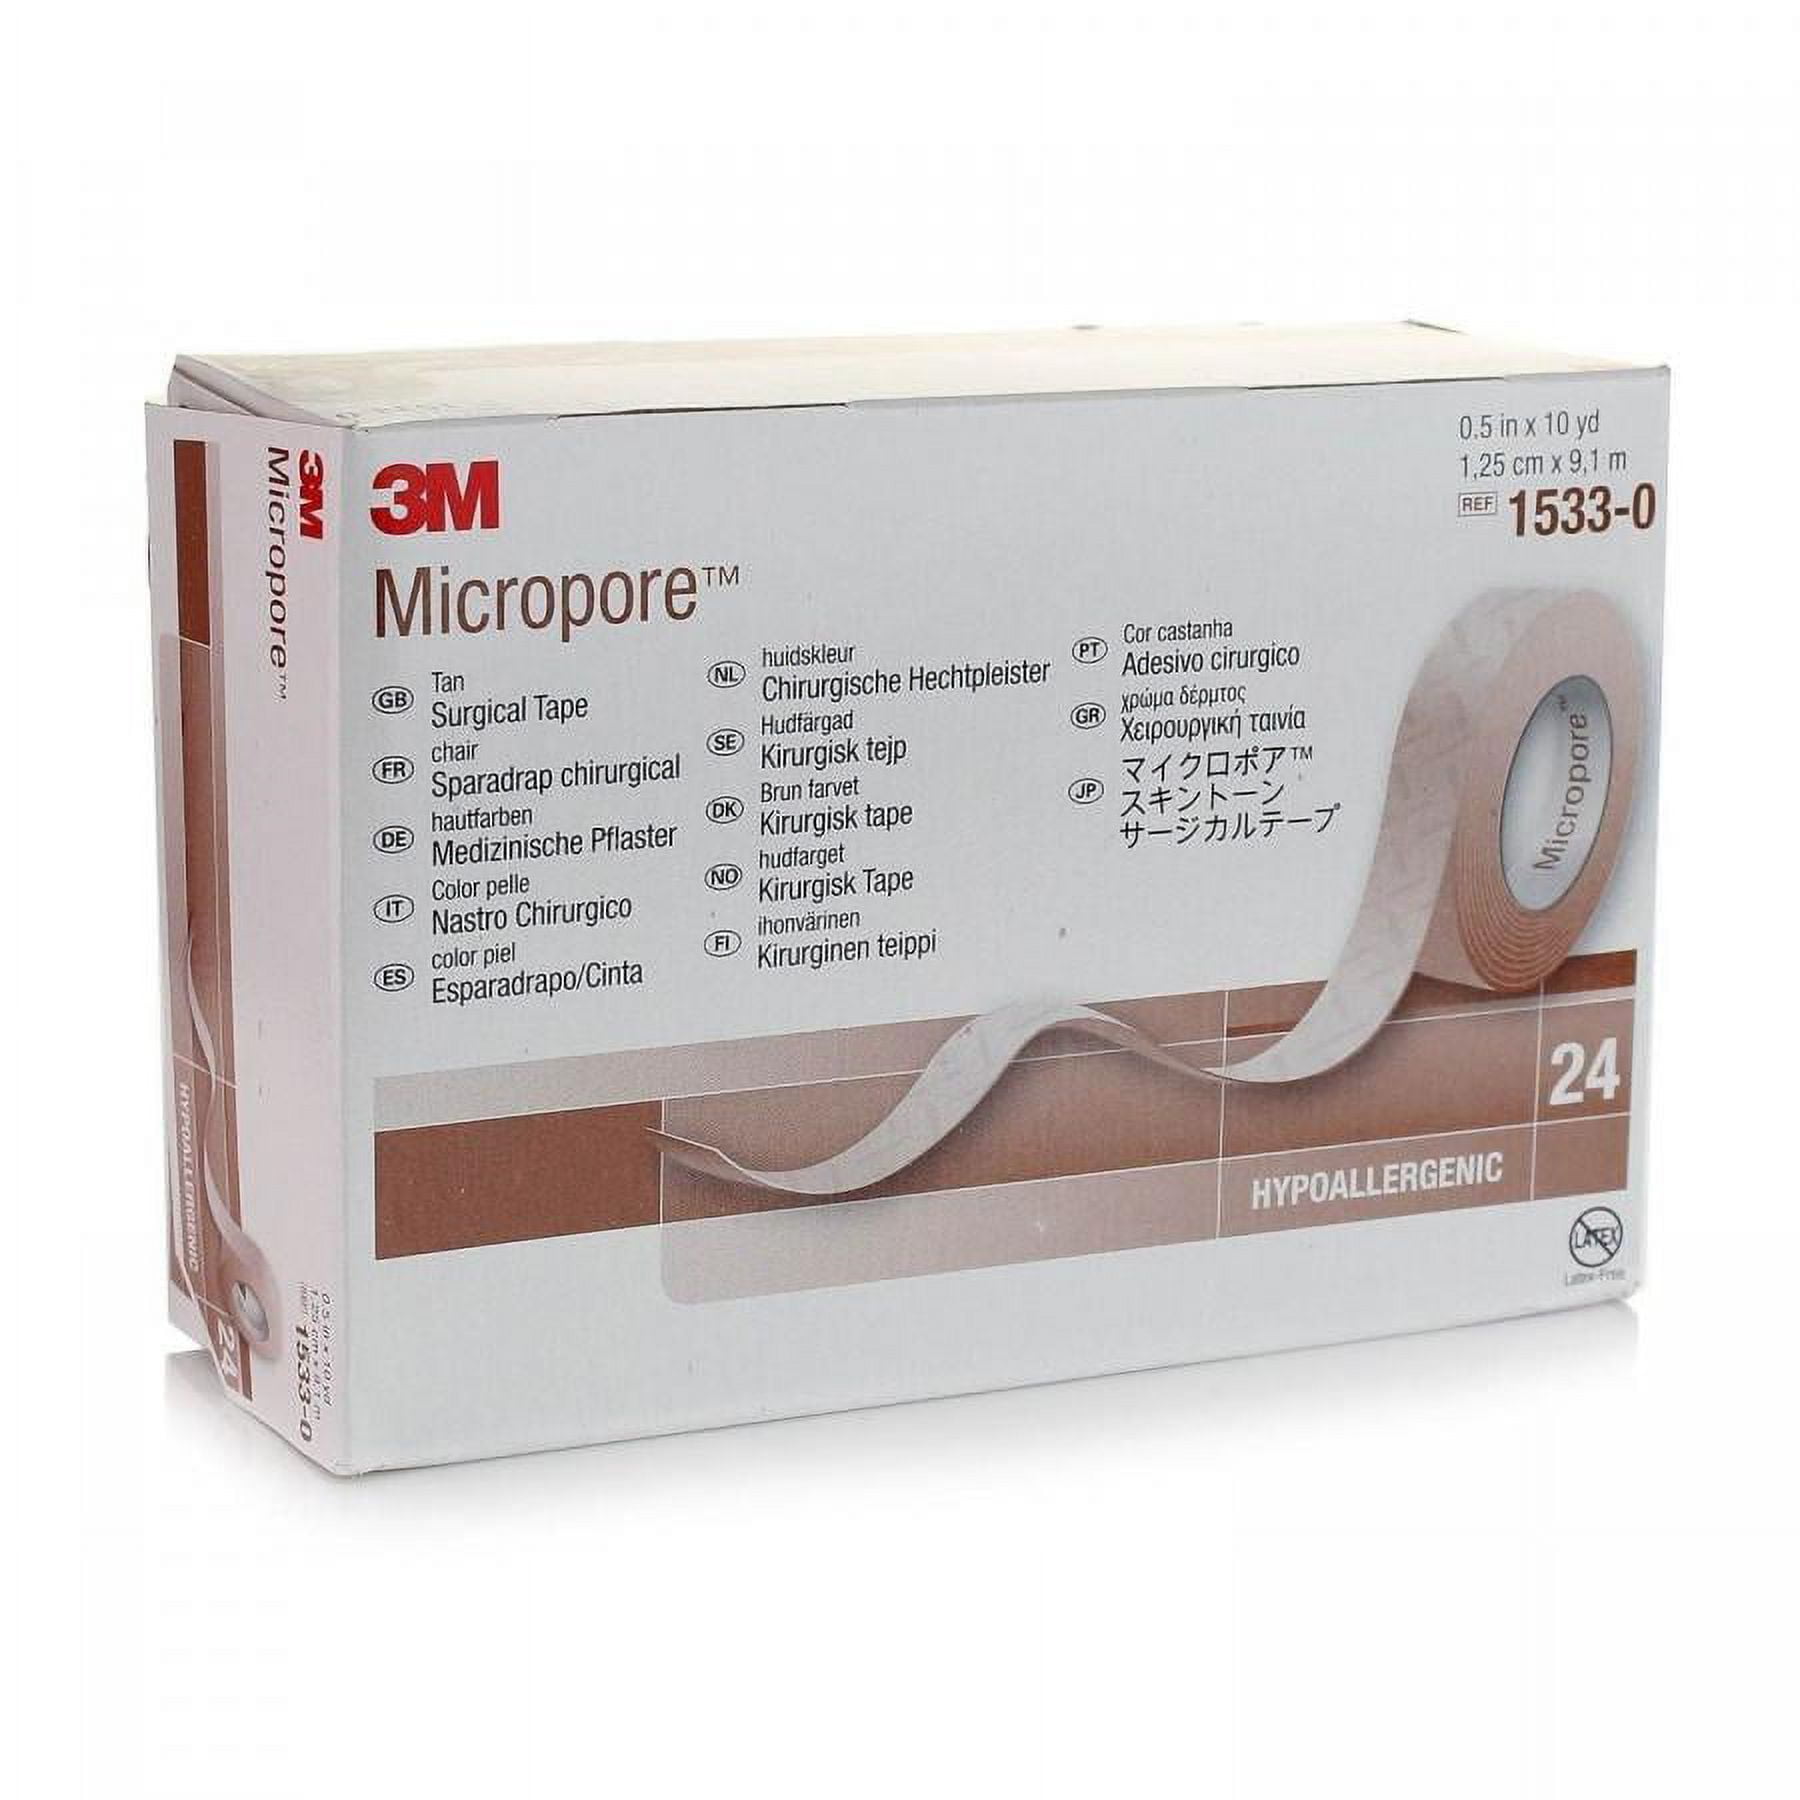 3M Micropore Surgical Tape, 1/2 x 10 Yards, 24 per box